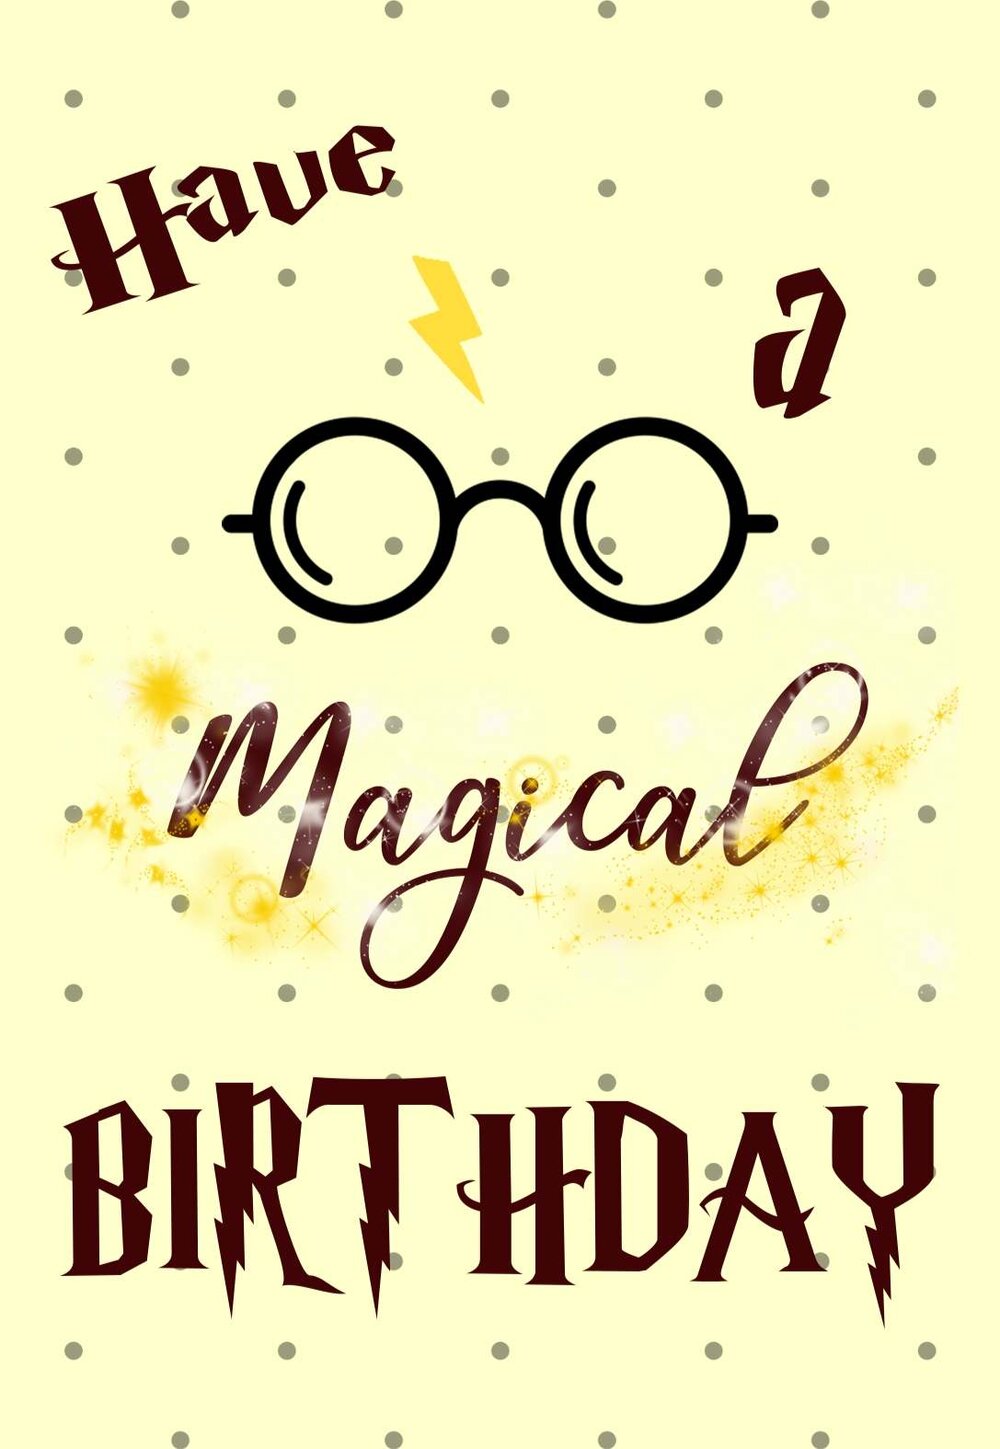 harry-potter-happy-birthday-card-printable-birthday-cards